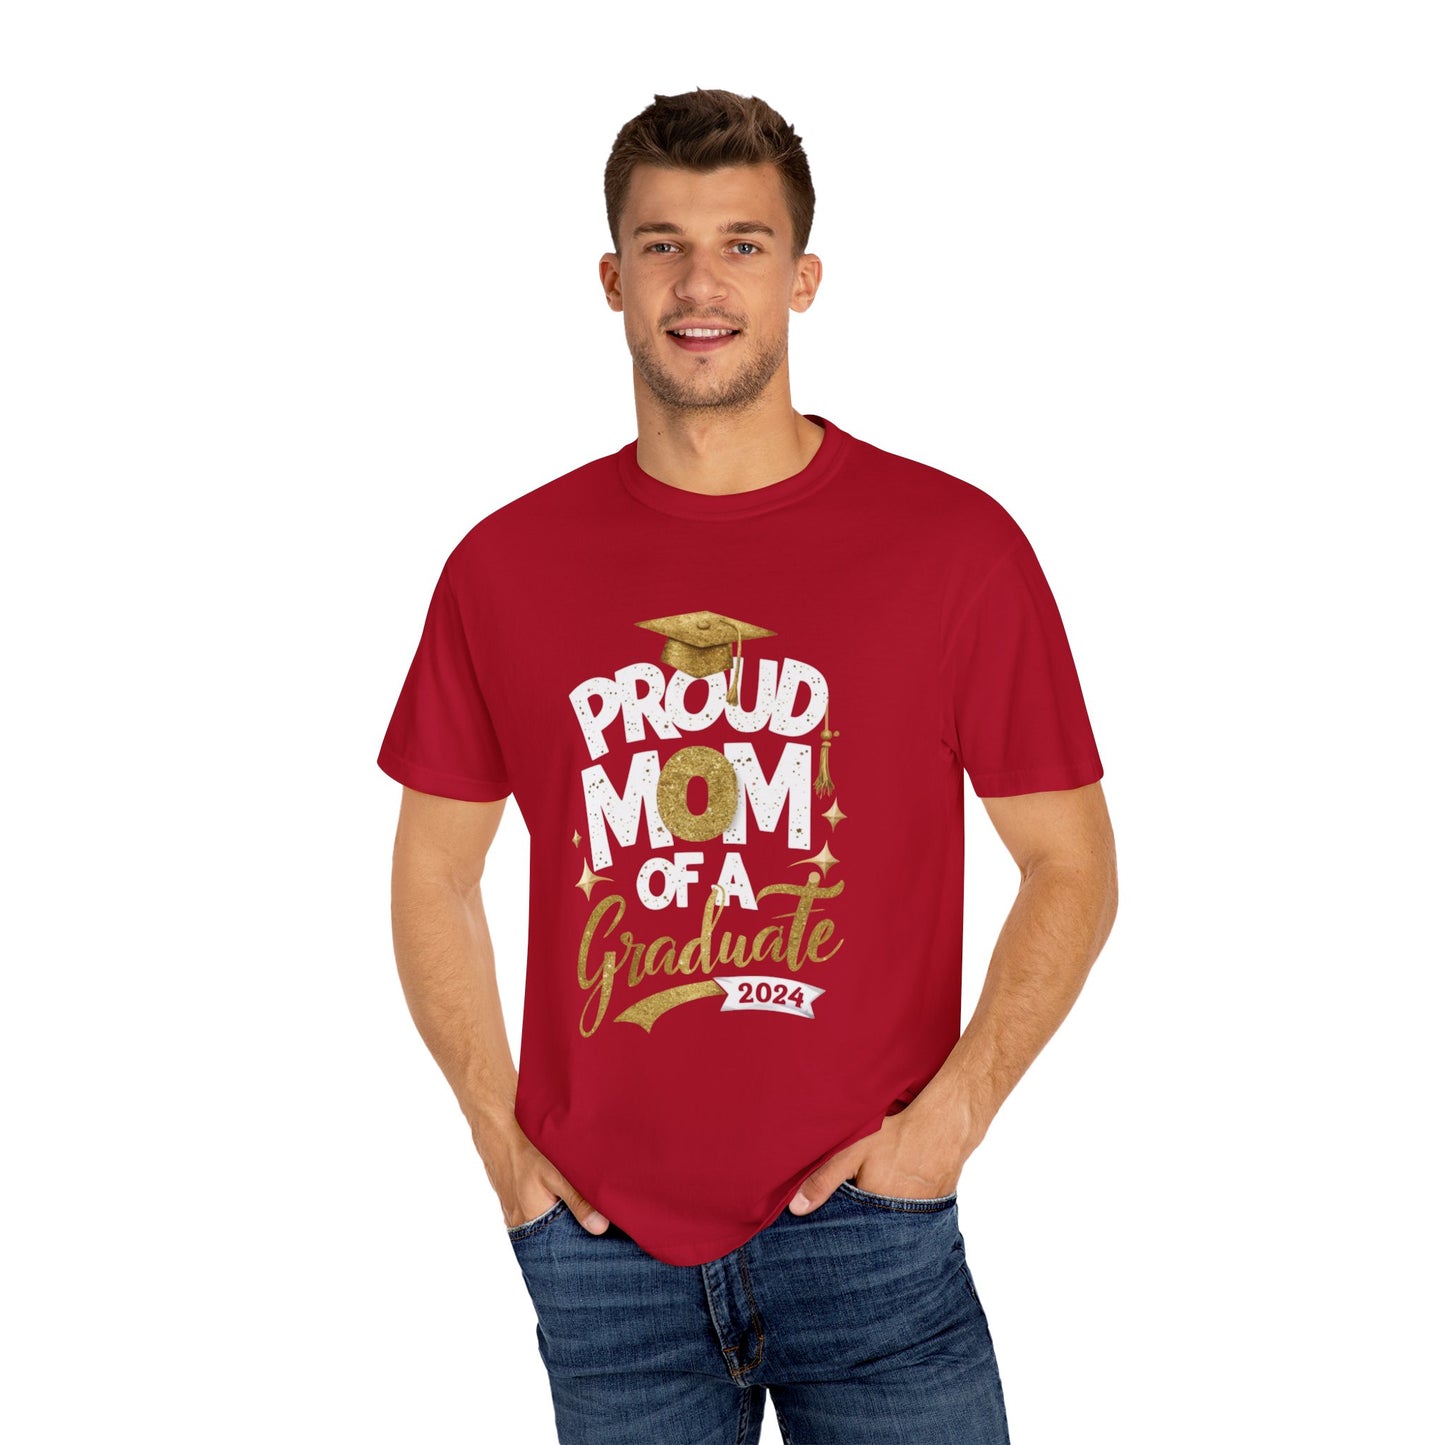 Proud Mom of a 2024 Graduate Unisex Garment-dyed T-shirt Cotton Funny Humorous Graphic Soft Premium Unisex Men Women Red T-shirt Birthday Gift-21